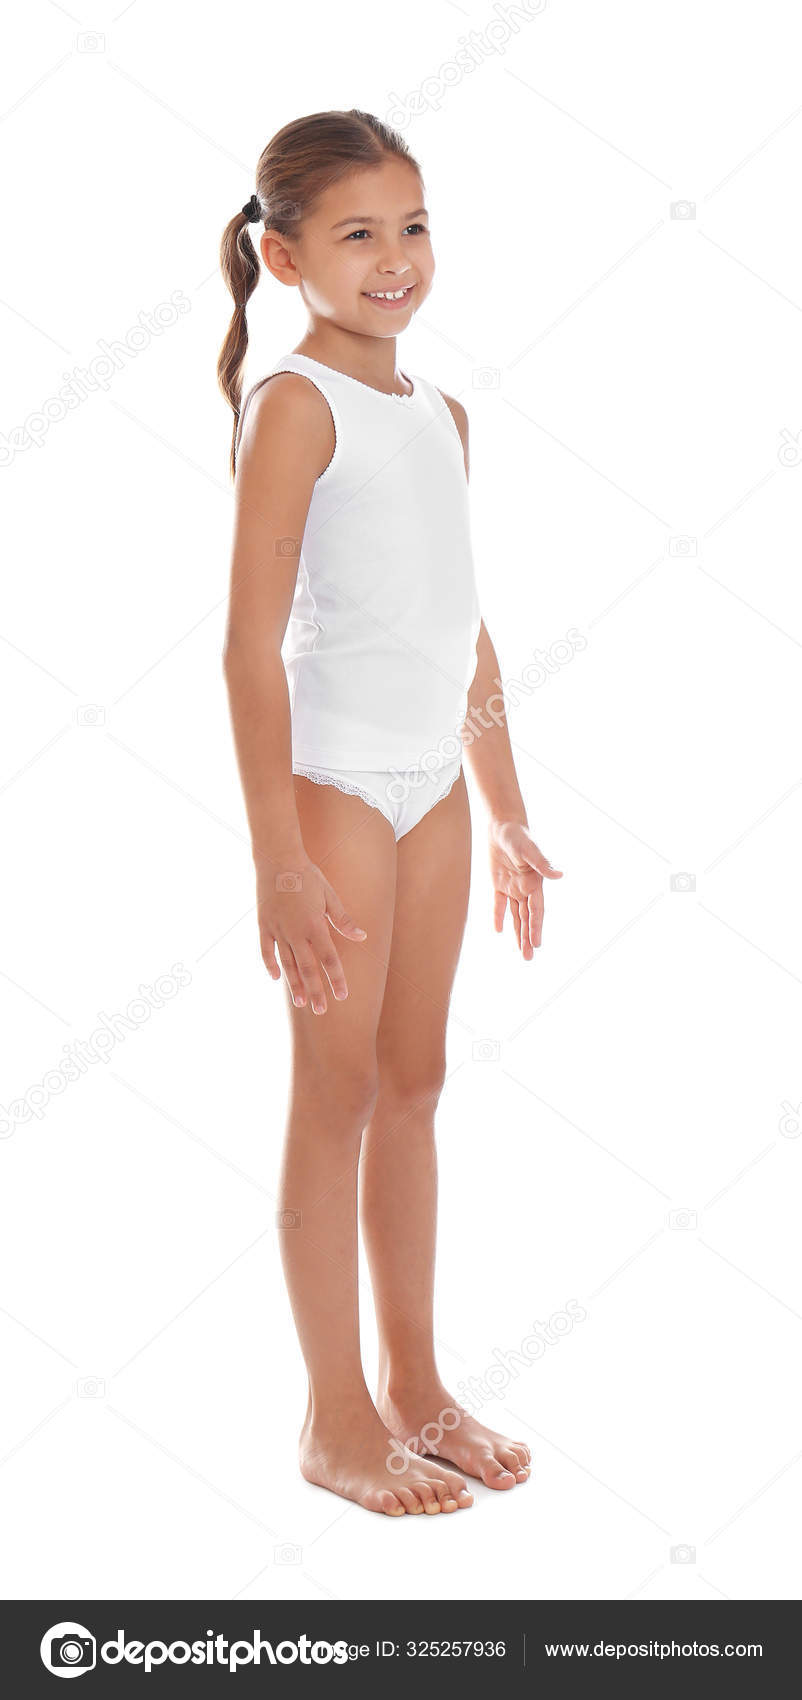 Cute Little Girl Underwear White Background Stock Photo by ©NewAfrica  325257936